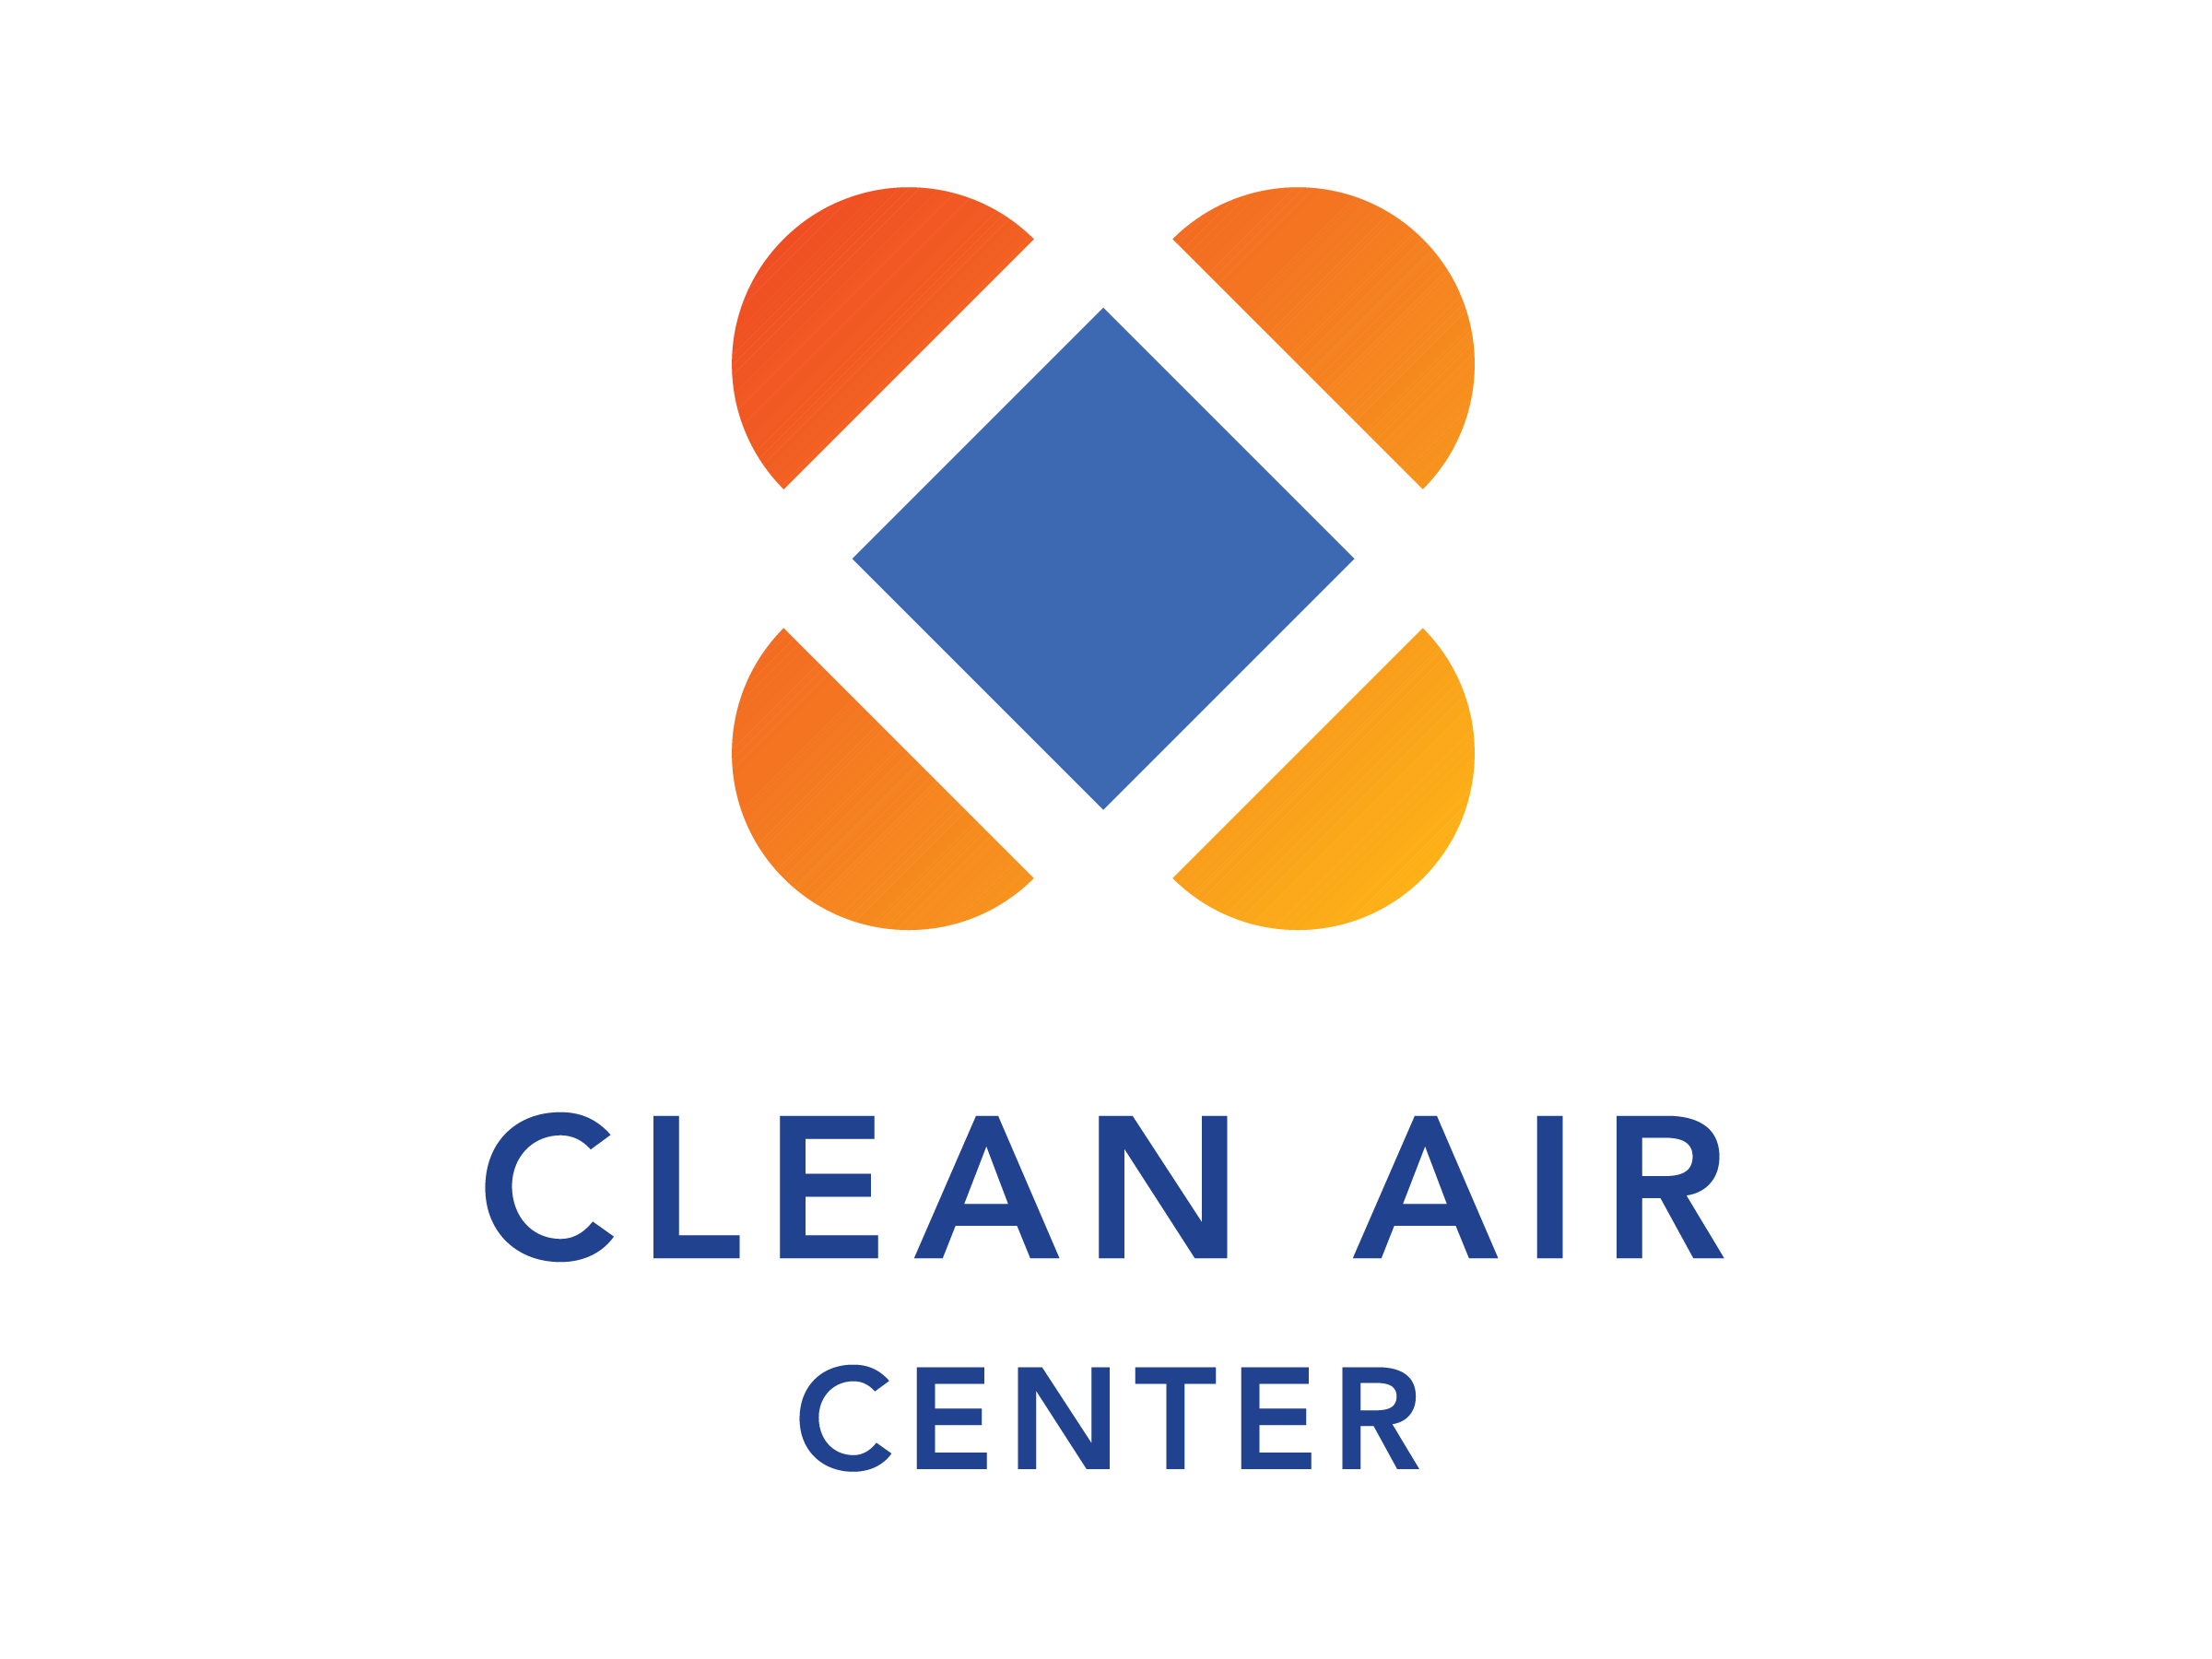 Clean Air Center logo showing a blue diamond flanked on each edge by orange half-circles